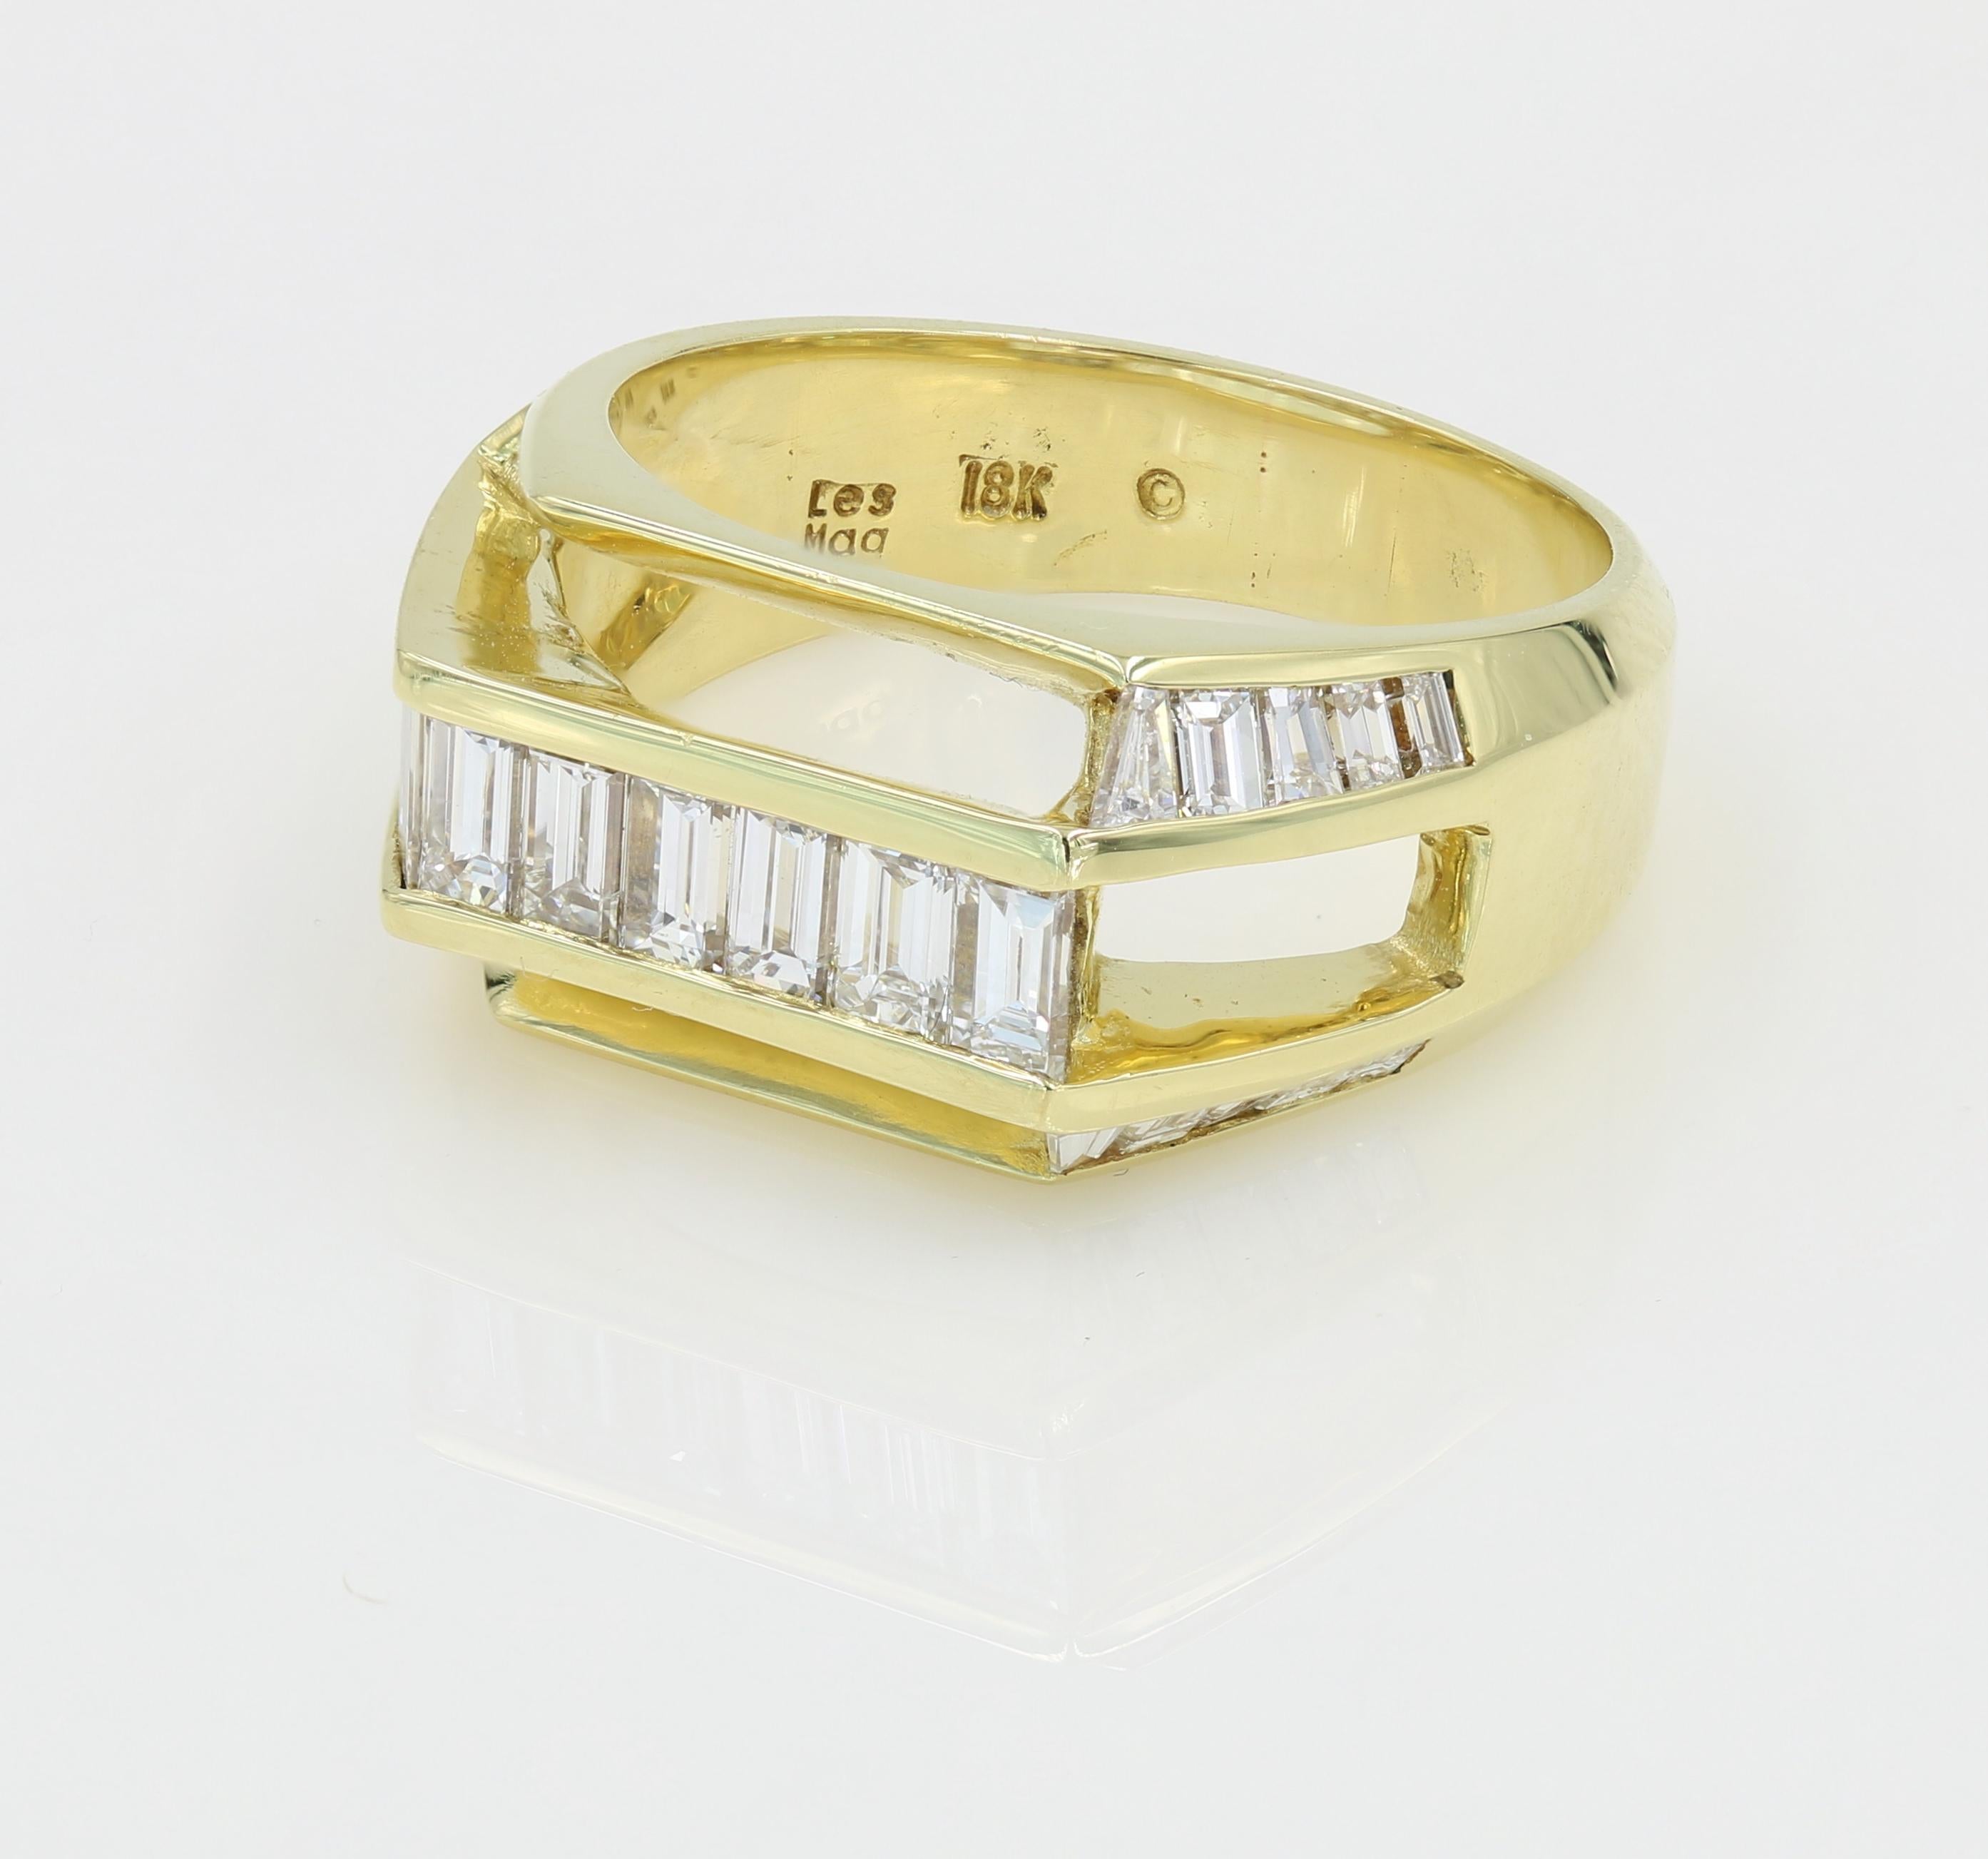 Contemporary Lester Lampert Original Design Gent's Baguette Diamond Ring in 18 Karat Gold